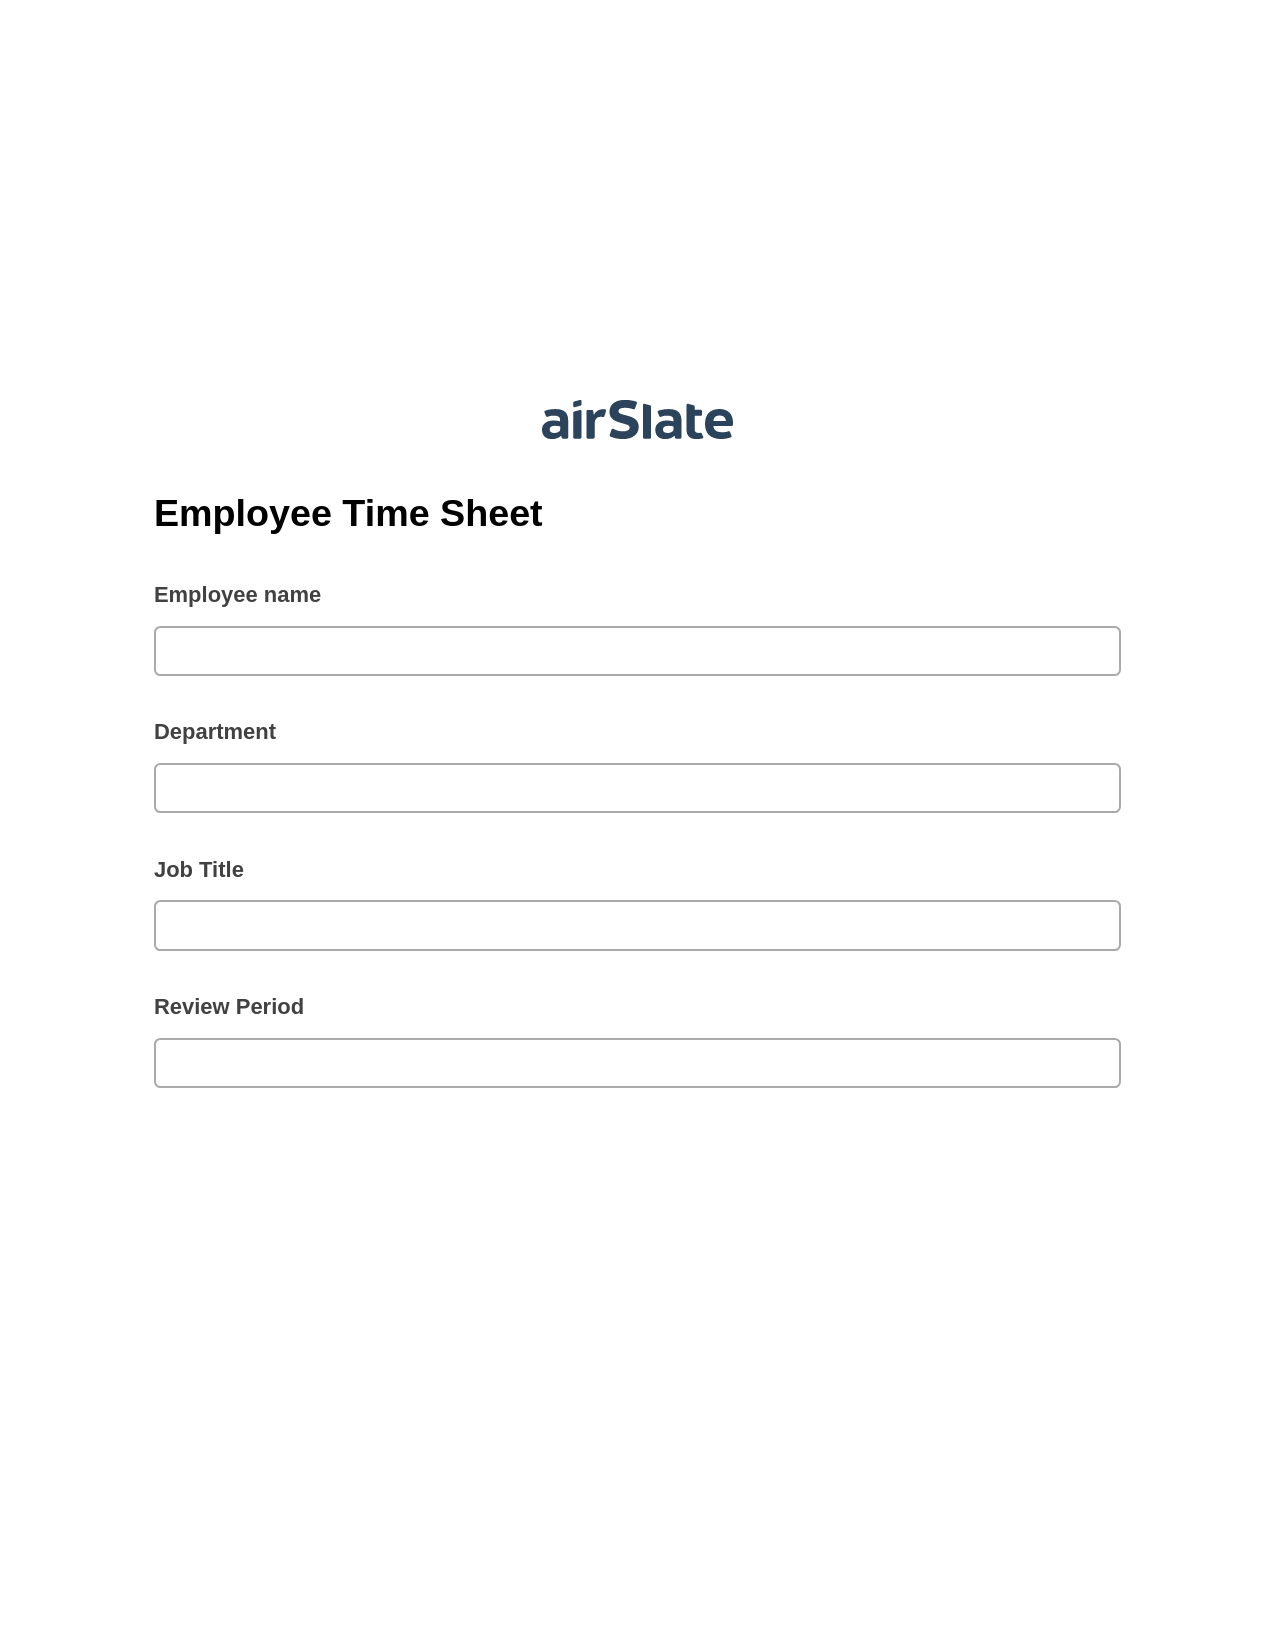 Employee Time Sheet Pre-fill Document Bot, Create Salesforce Records Bot, Export to Google Sheet Bot